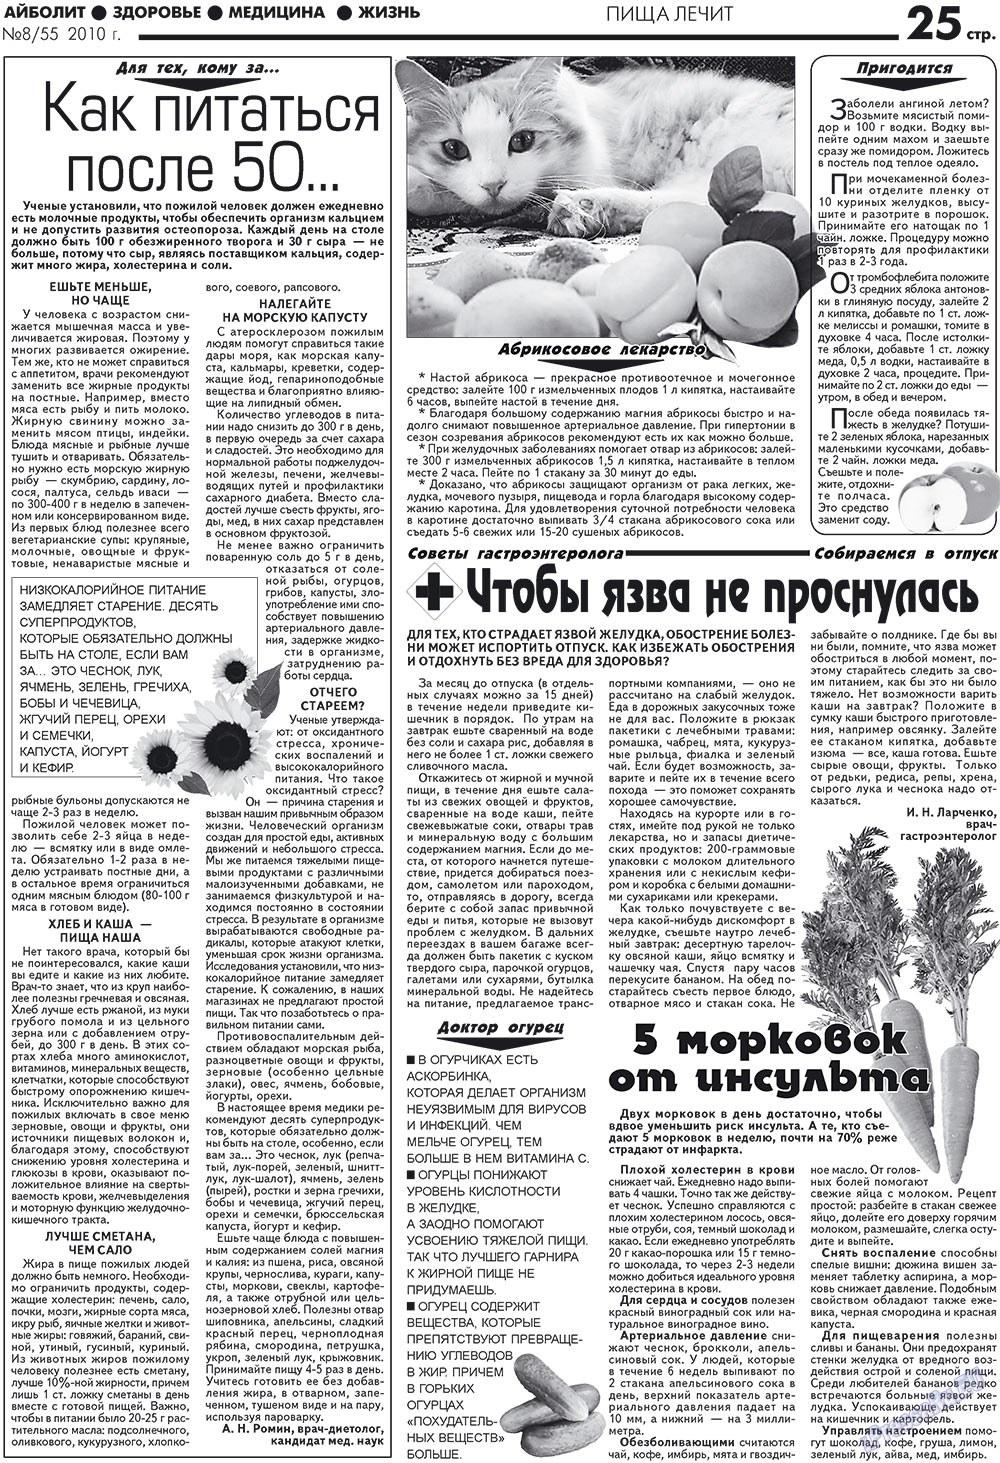 АйБолит (газета). 2010 год, номер 8, стр. 25